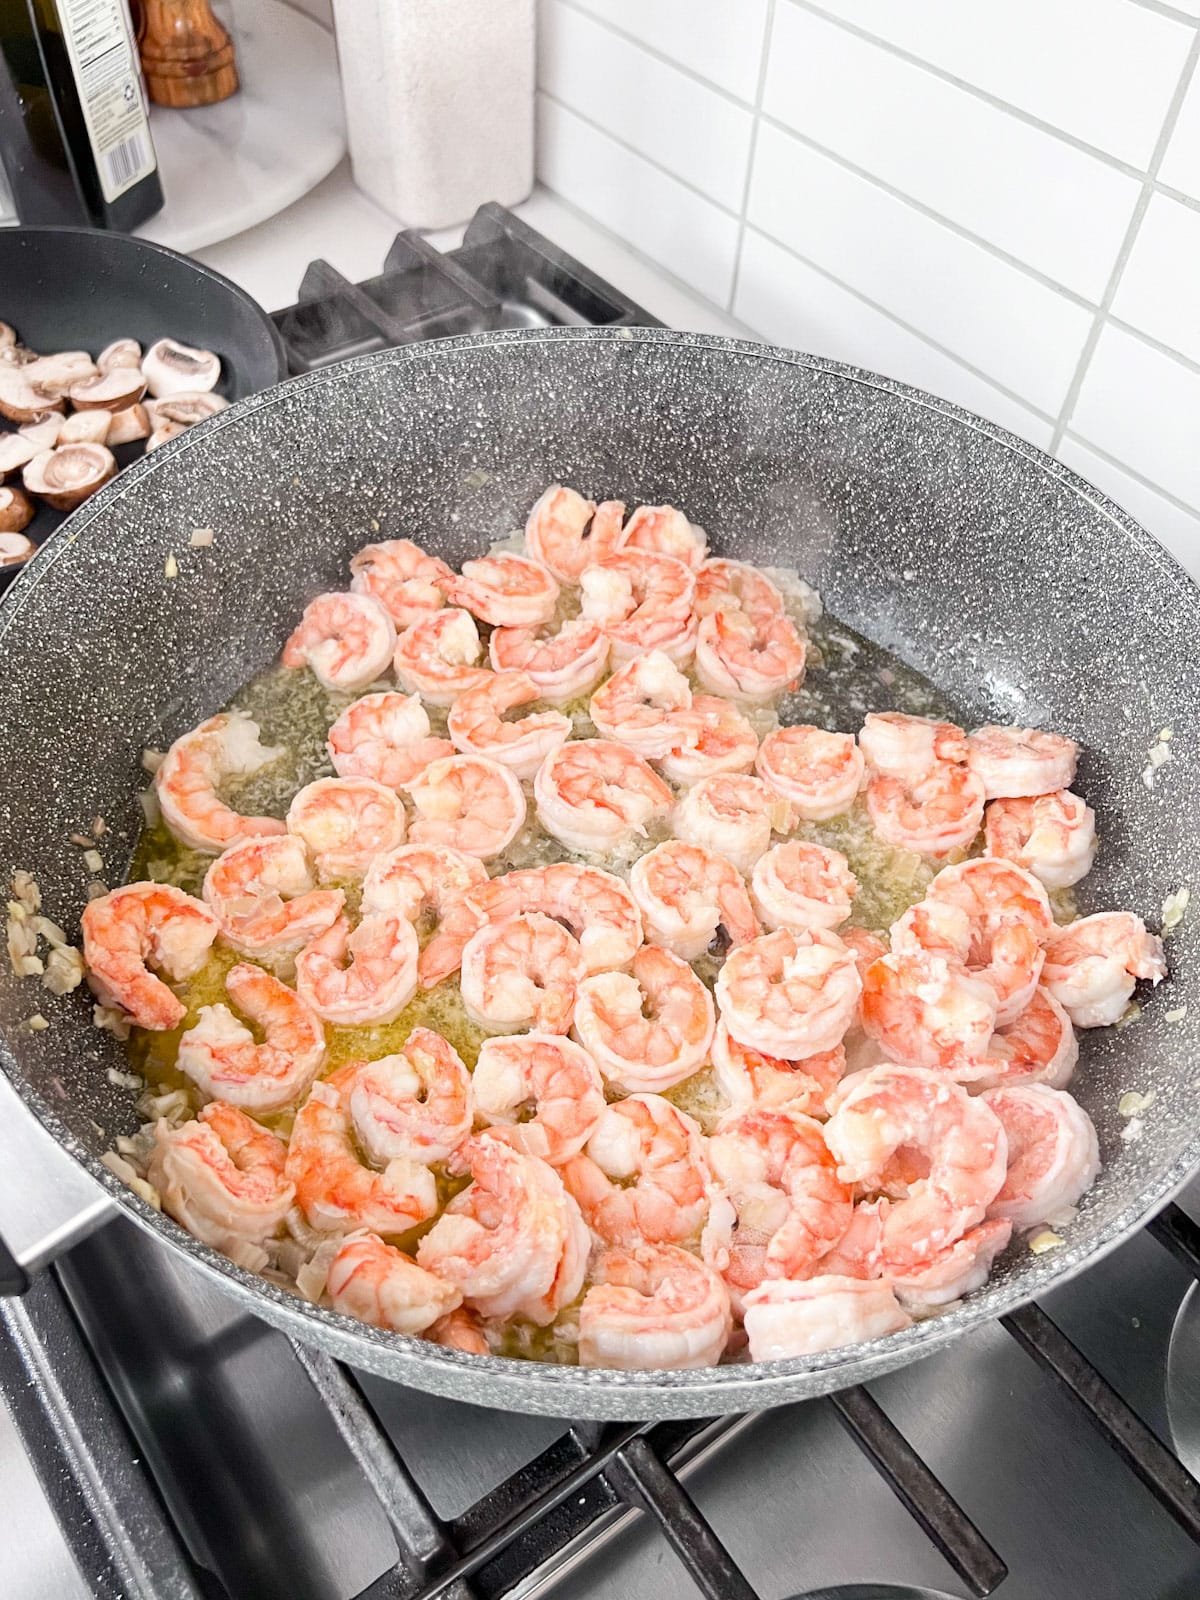 Shrimp sautéing in a pan on a stove.